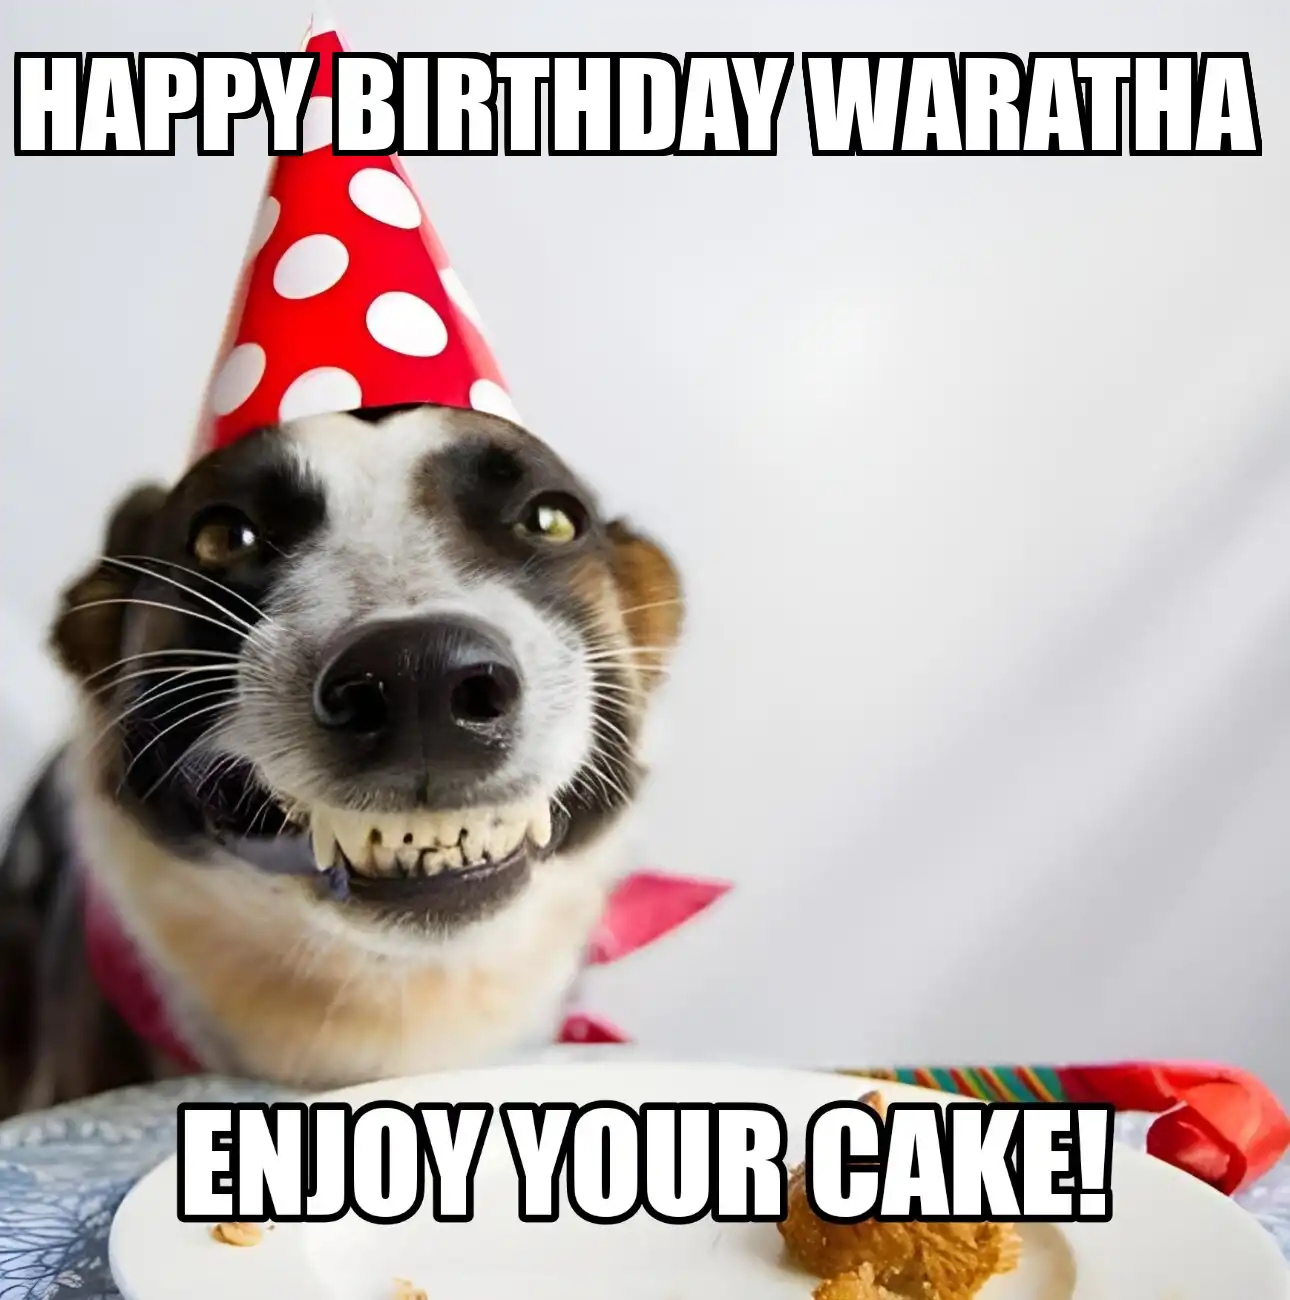 Happy Birthday Waratha Enjoy Your Cake Dog Meme